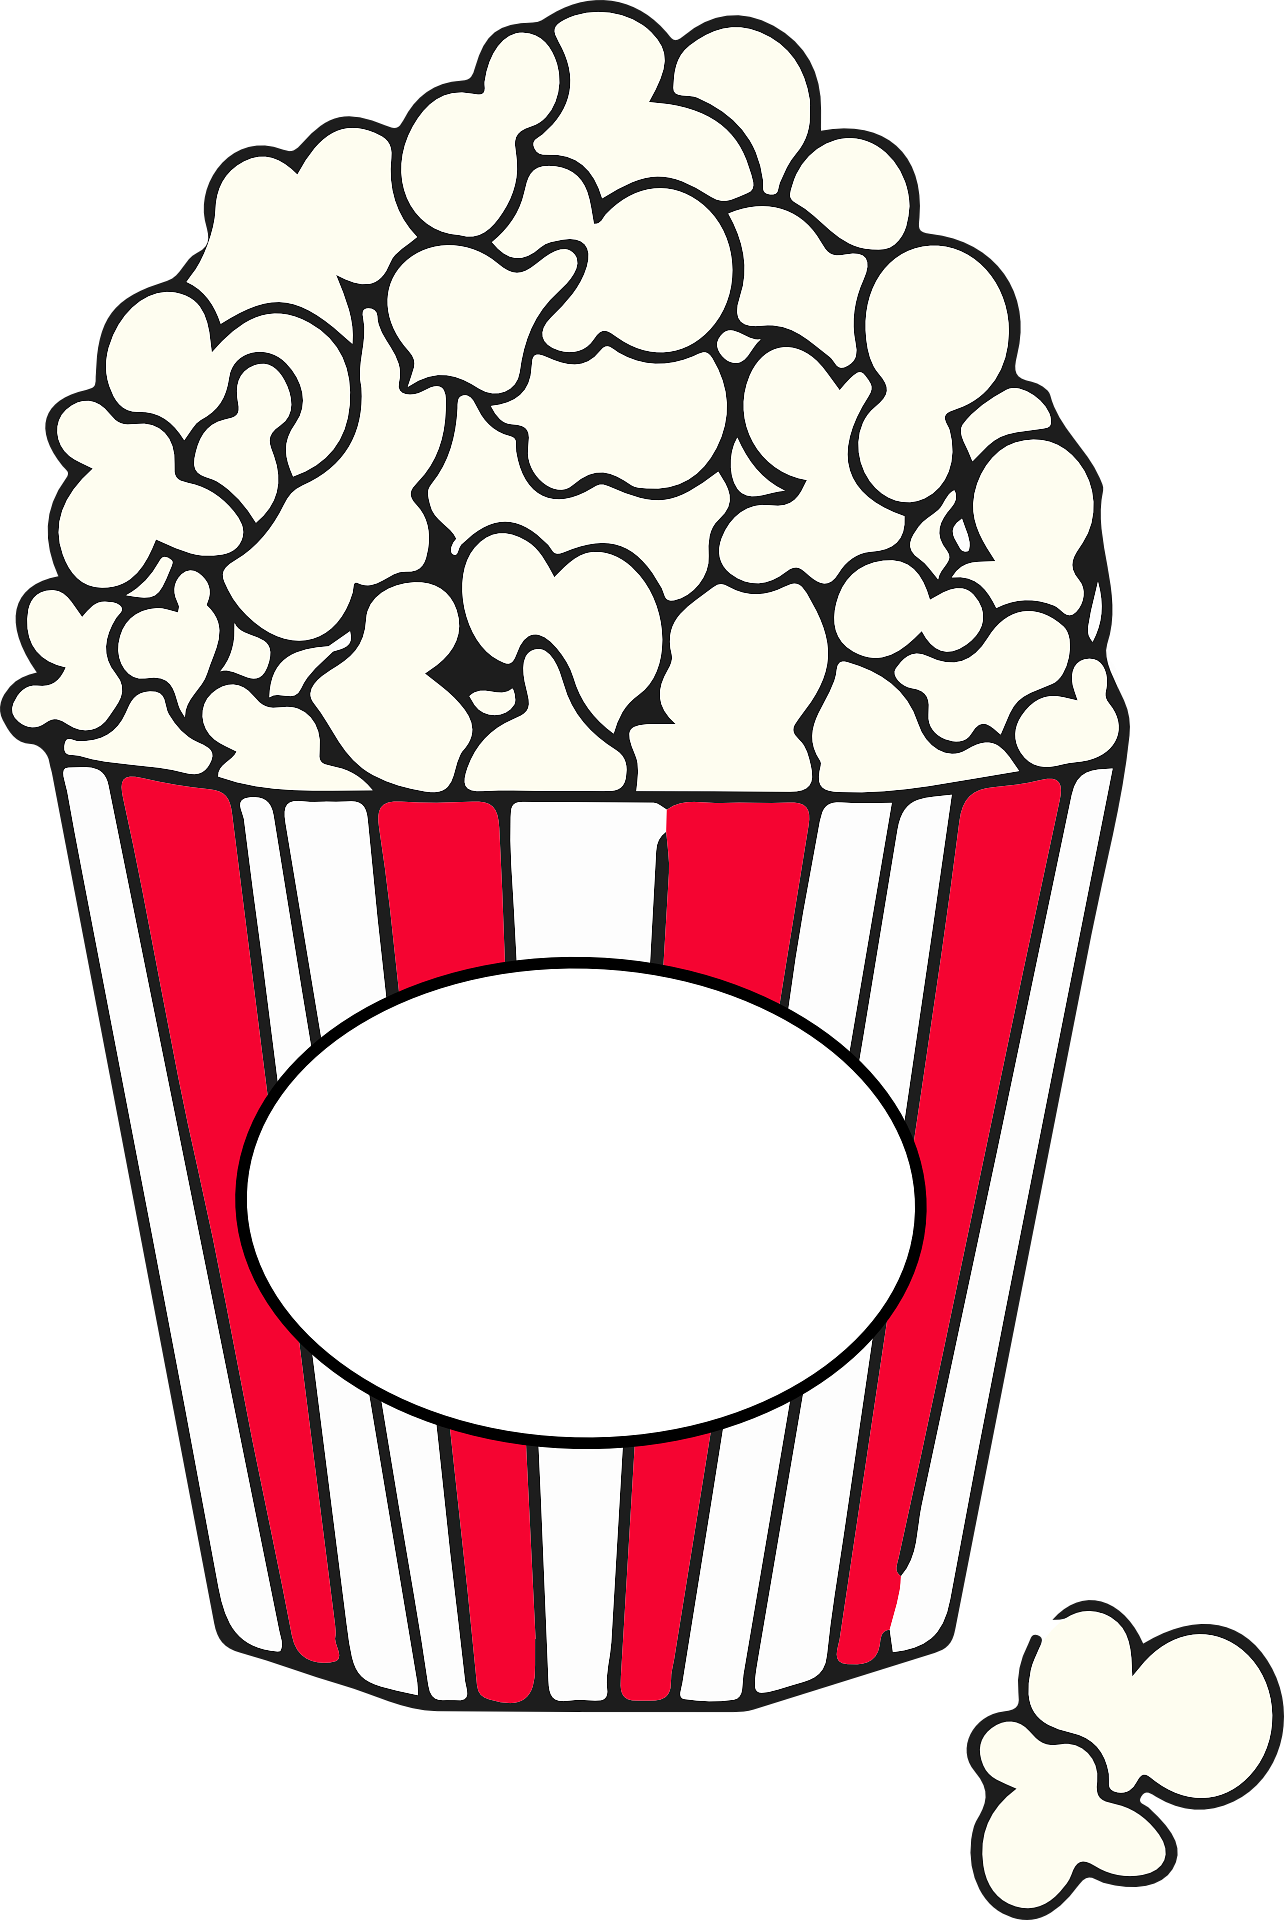 Cartoon image of popcorn